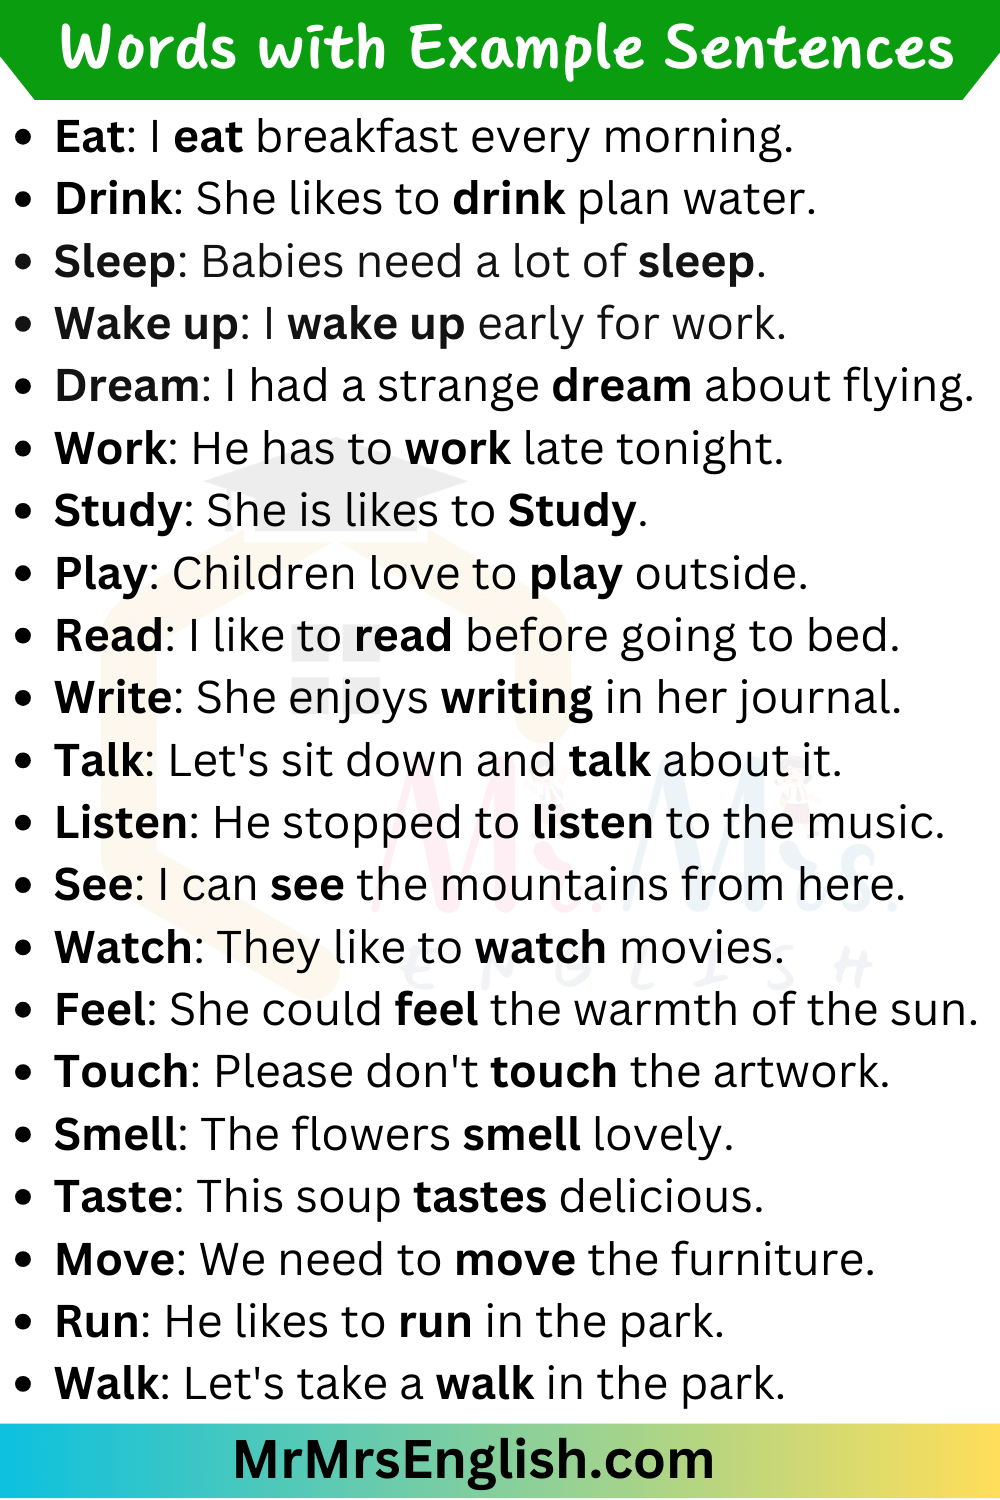 Daily Used Basic English Words with Sentences